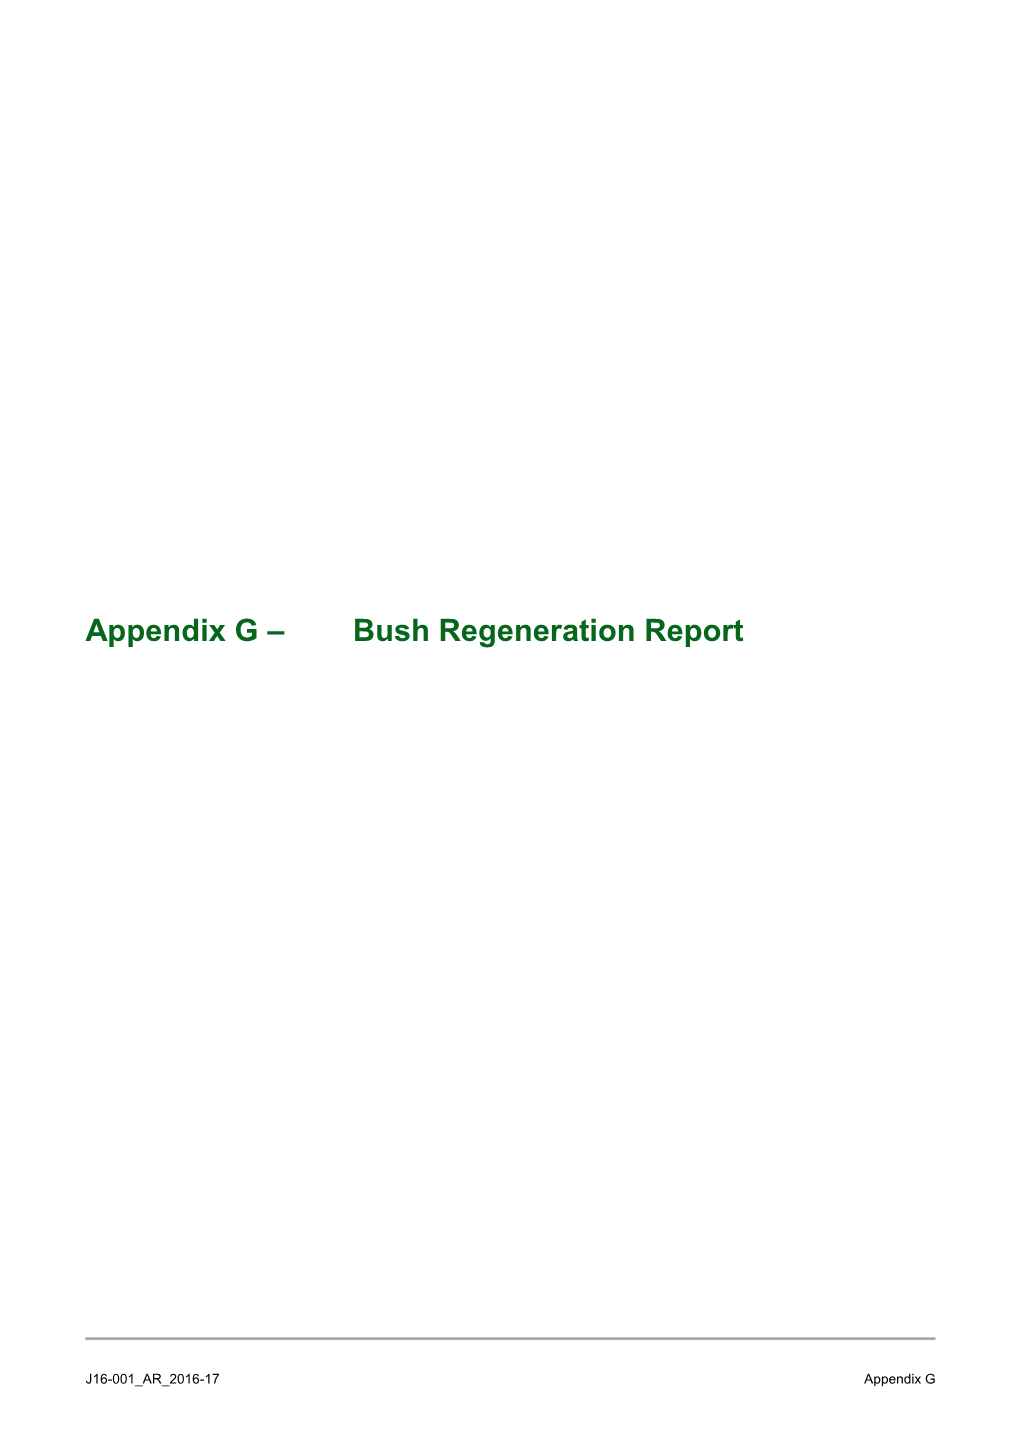 Bush Regeneration Report